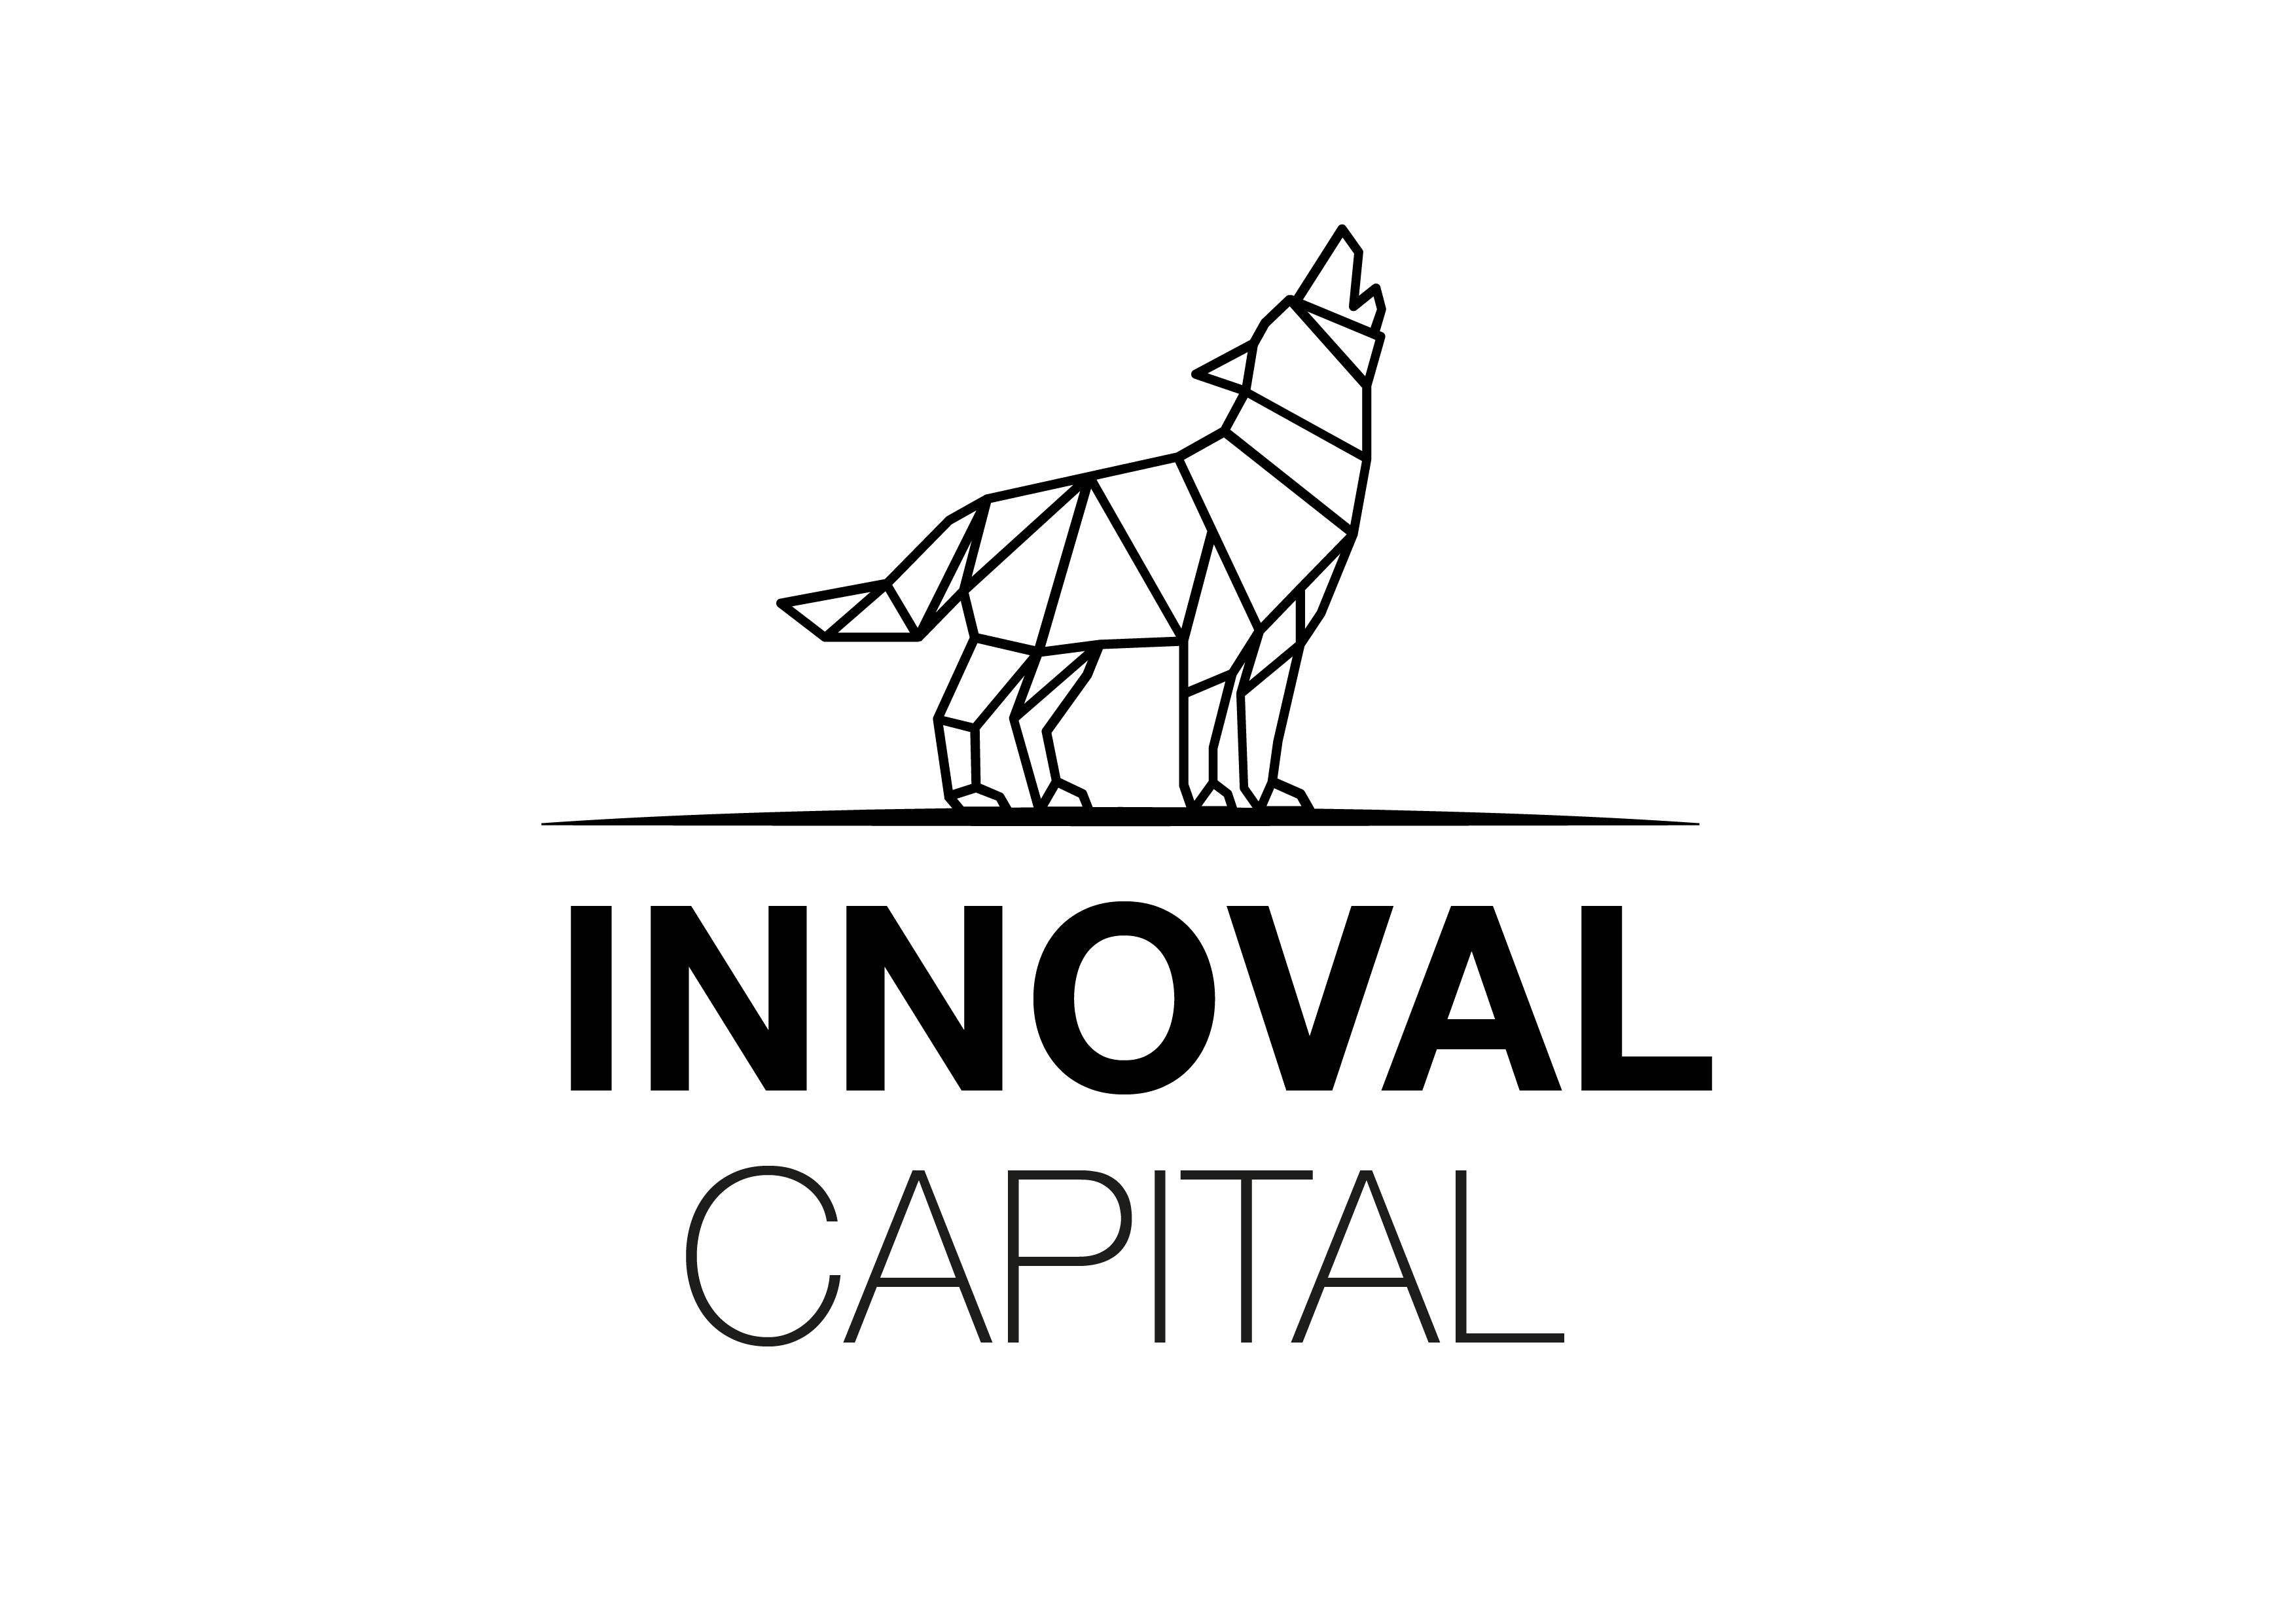 Innoval capital